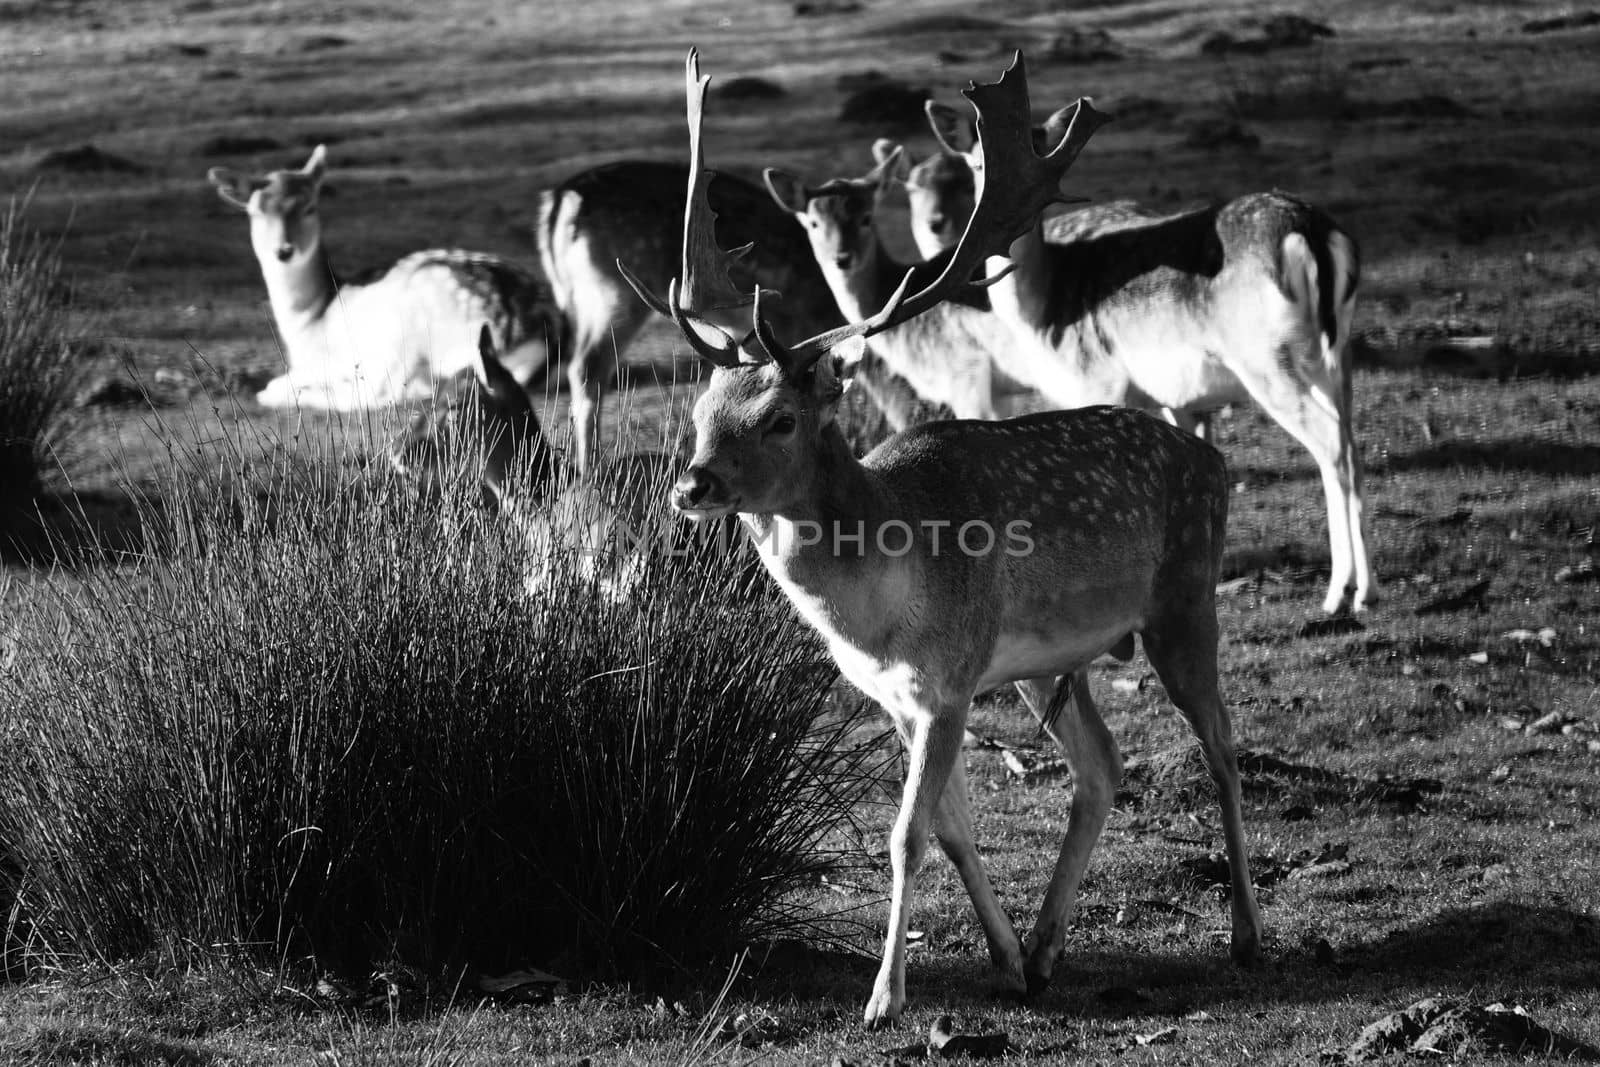 Fallow deer herd in Black and white by WielandTeixeira